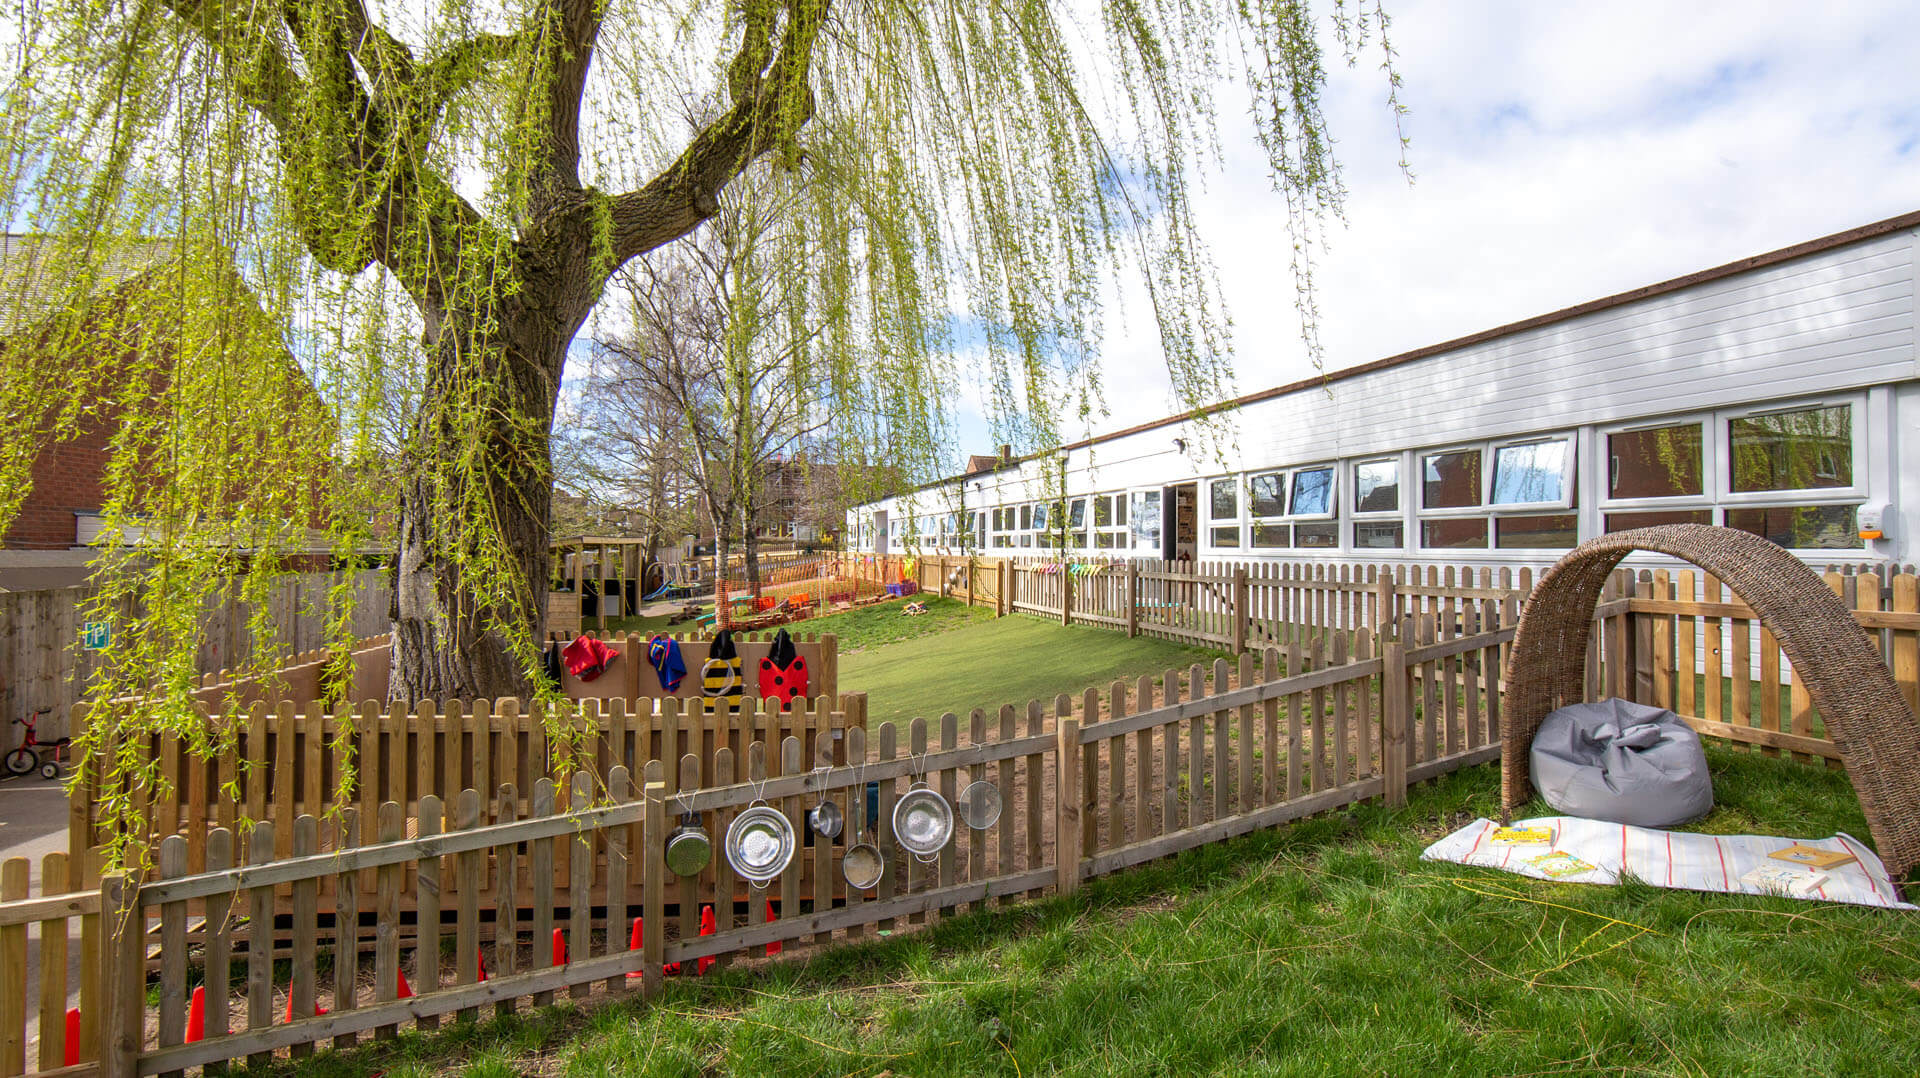 Southam Day Nursery and Preschool Garden